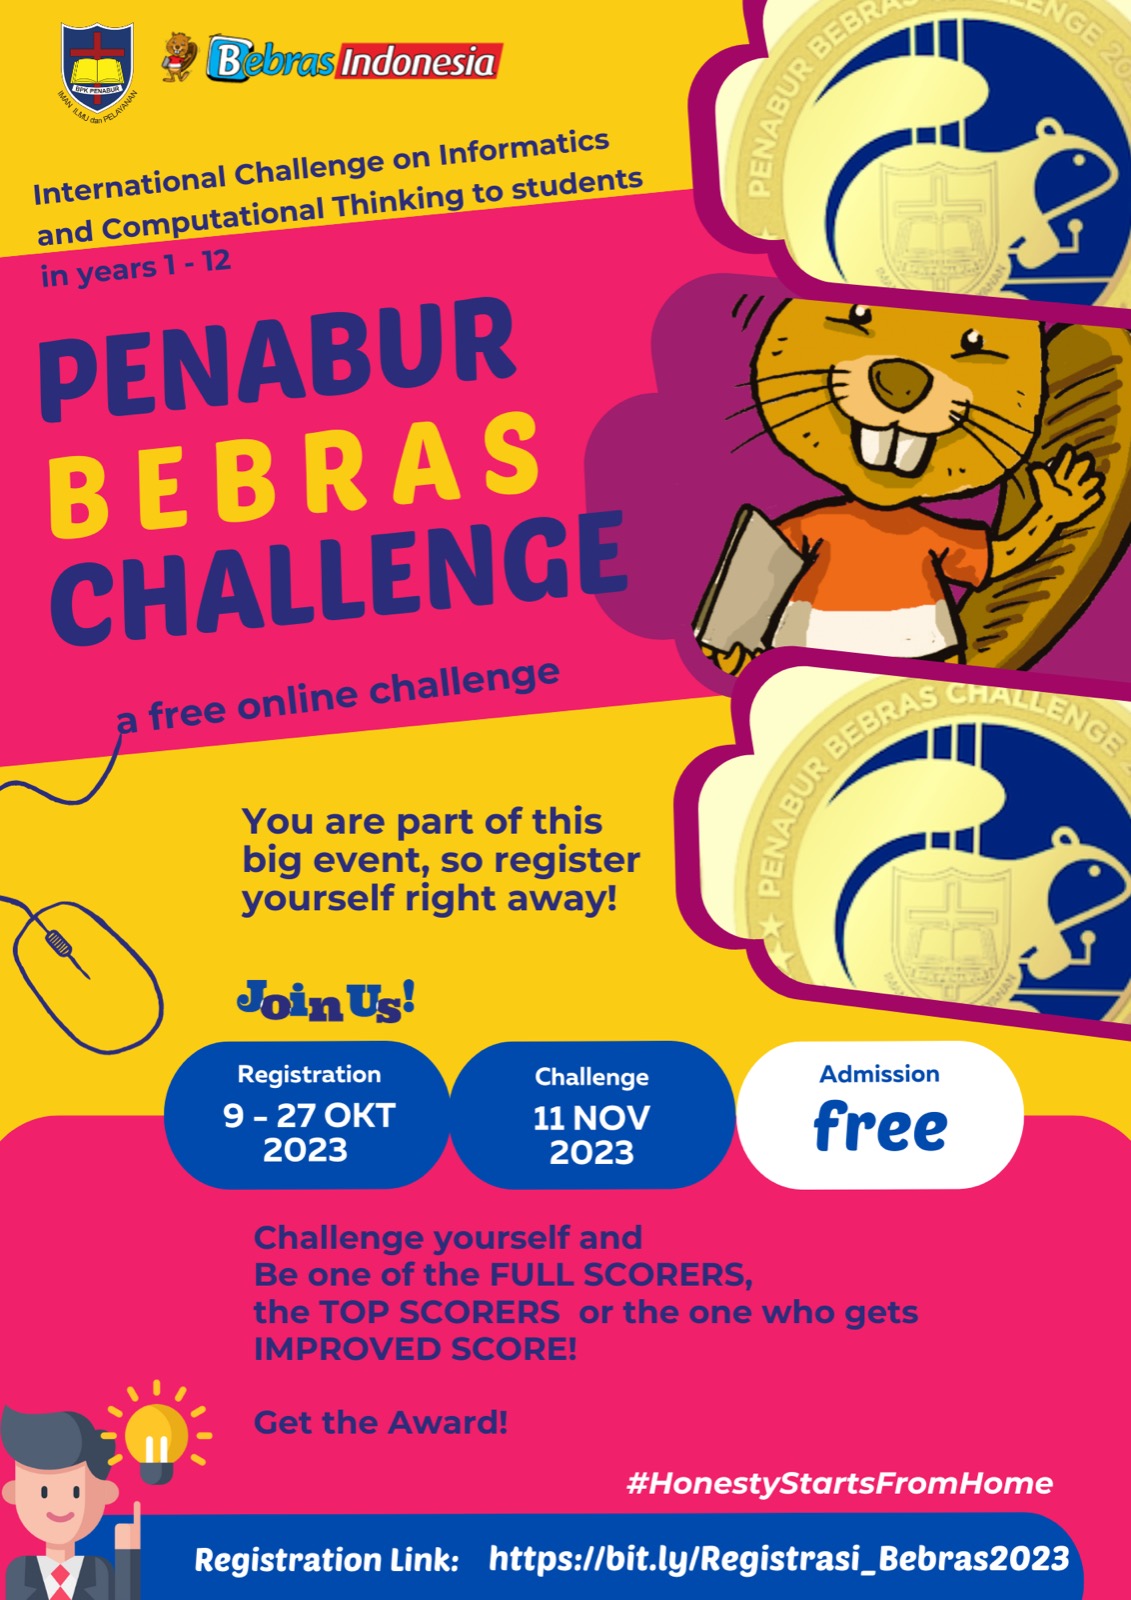 PENABUR BEBRAS CHALLENGE “Bebras Computational Thinking Challenge”